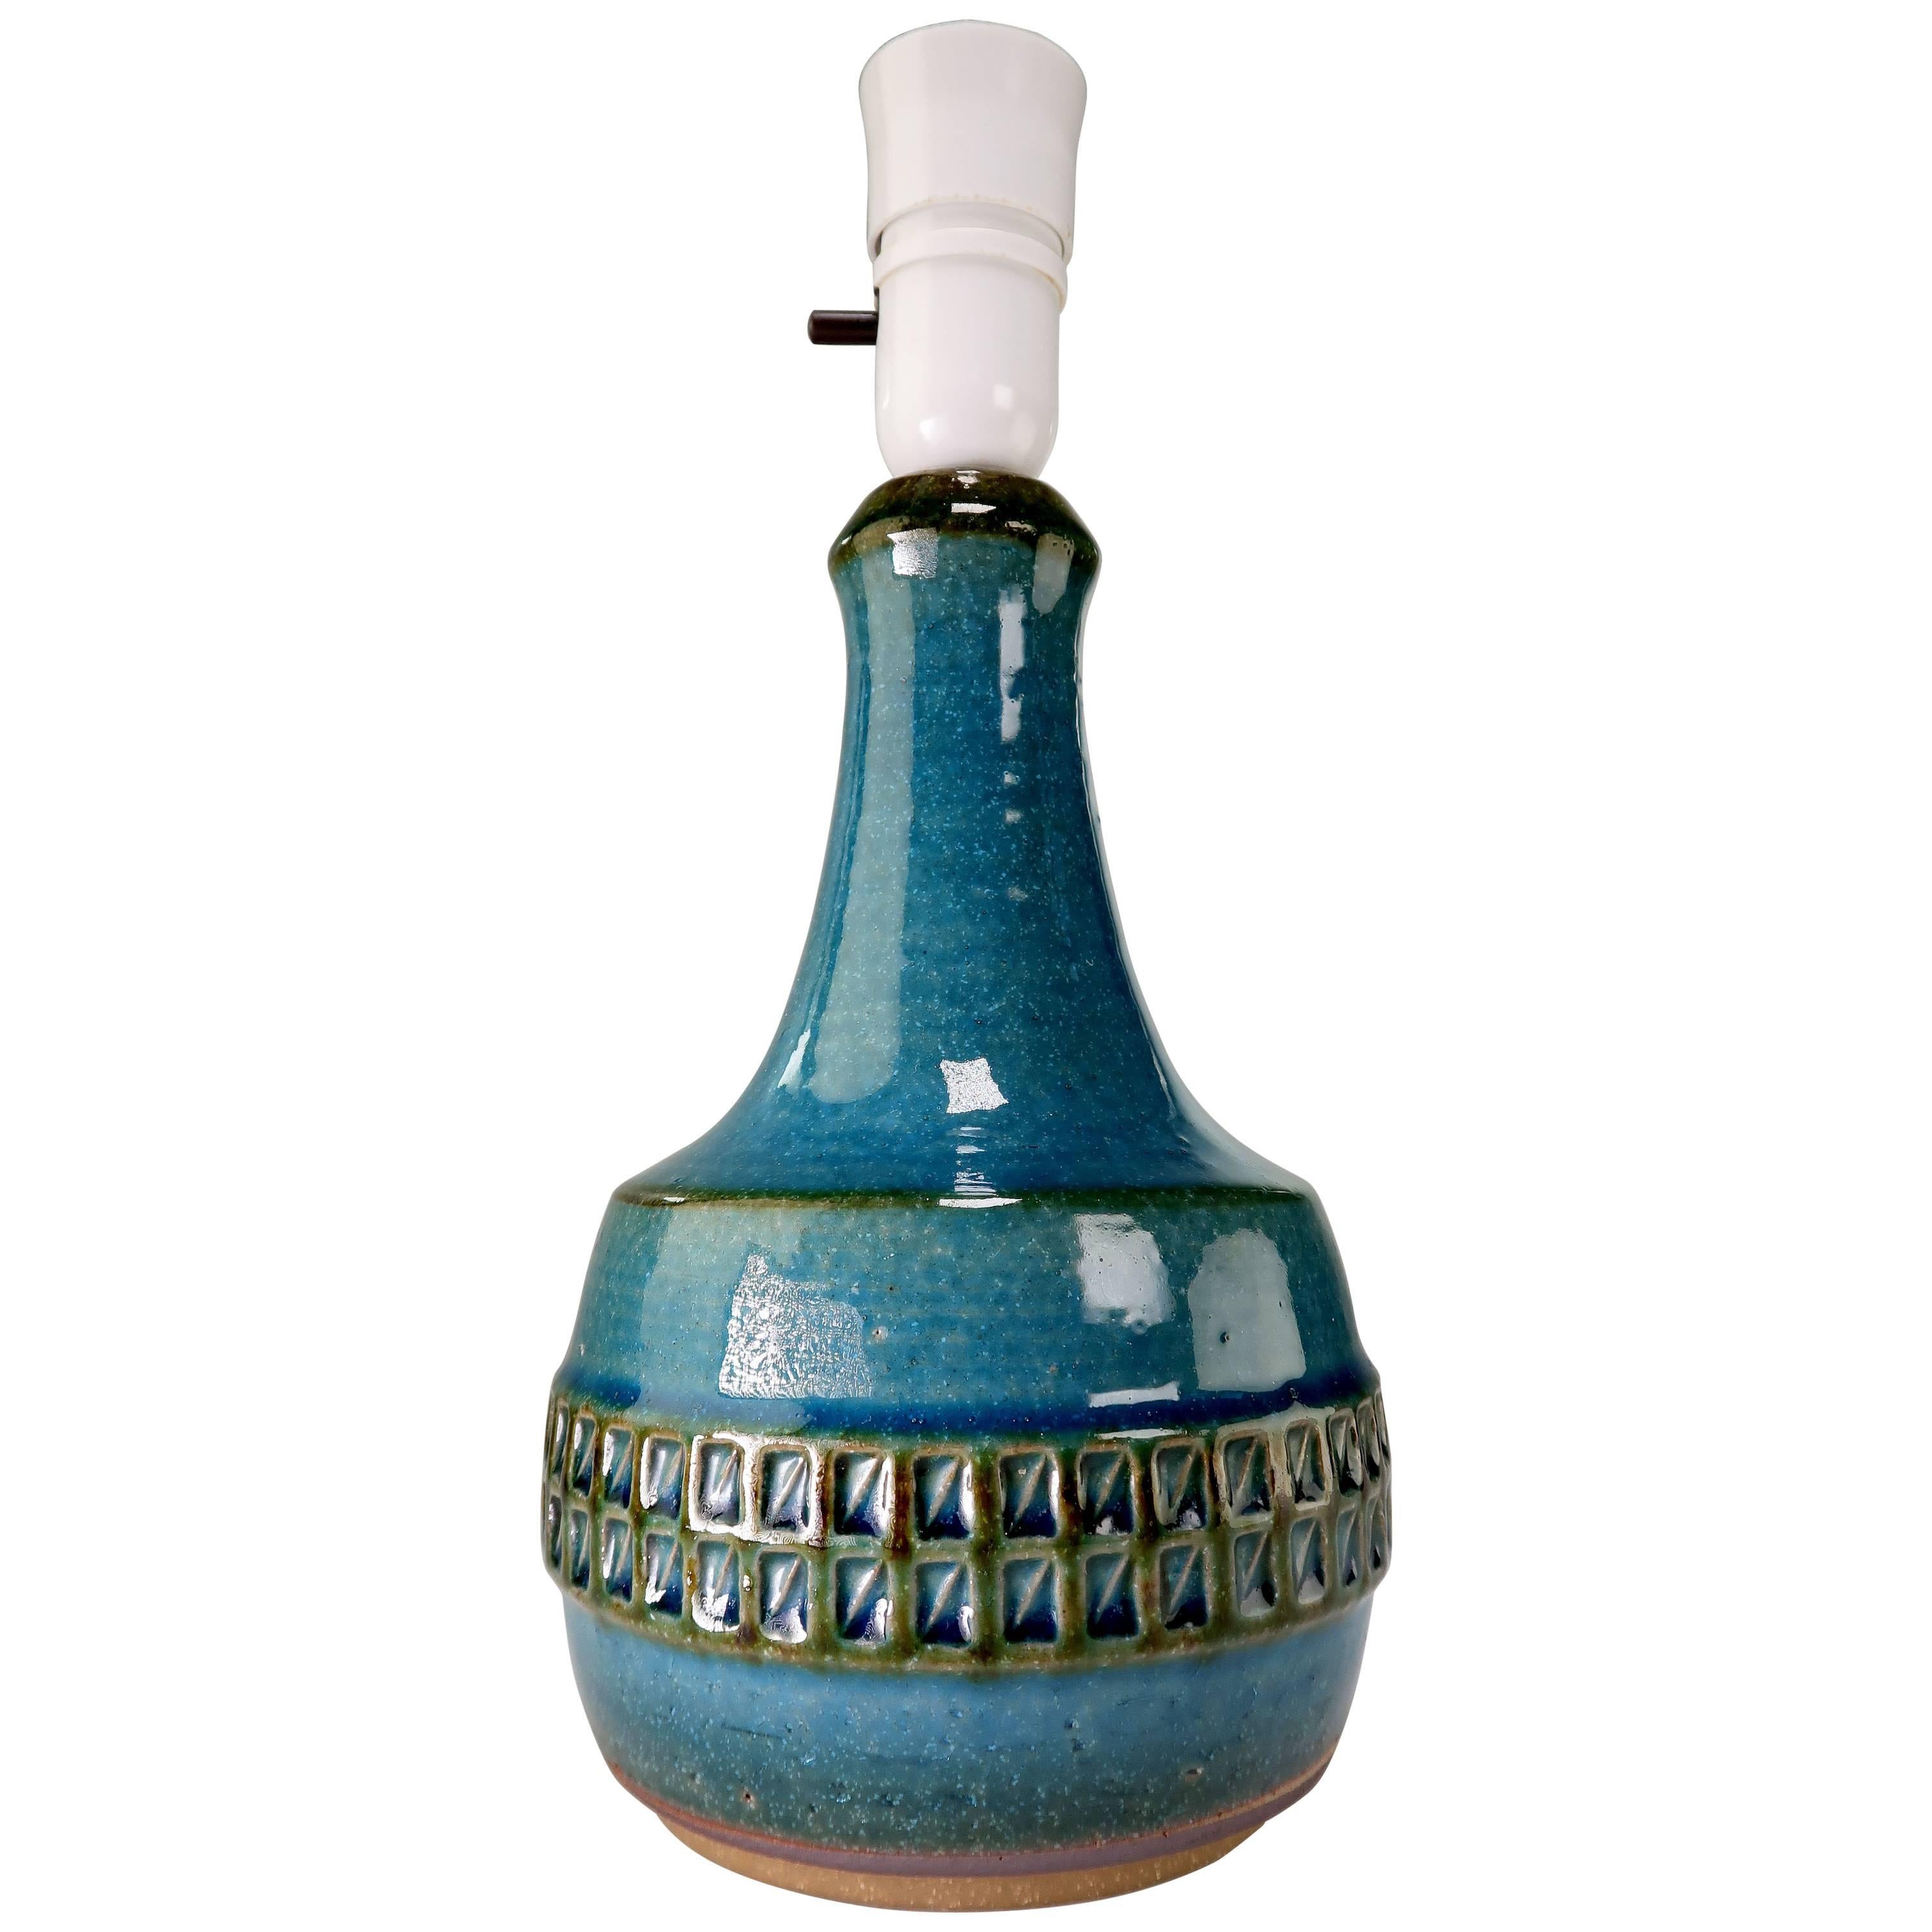 Joseph Simon for Danish Modern Soholm Petrol Blue Stoneware Lamp, 1960s